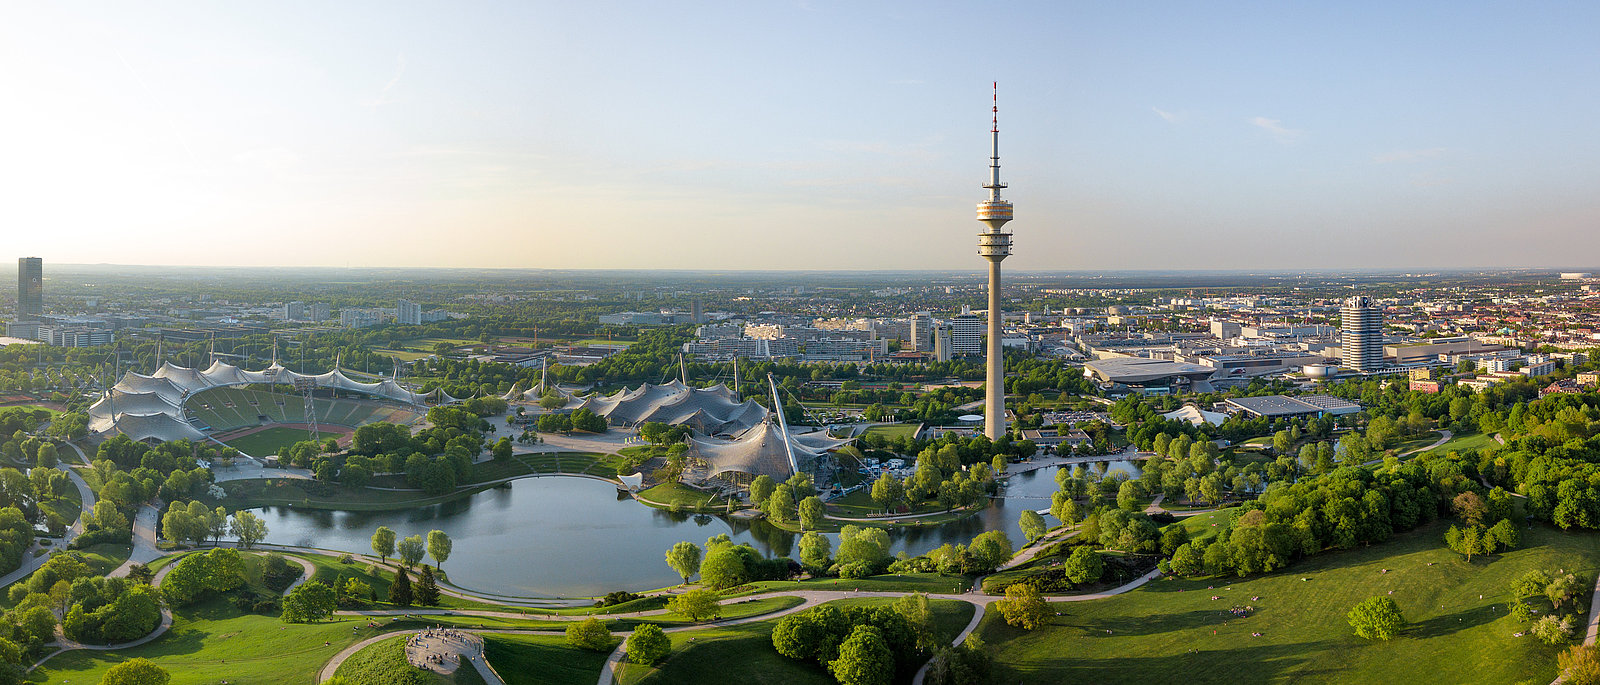 Blick auf den Olympiapark in München in unserer Projektregion Bayern